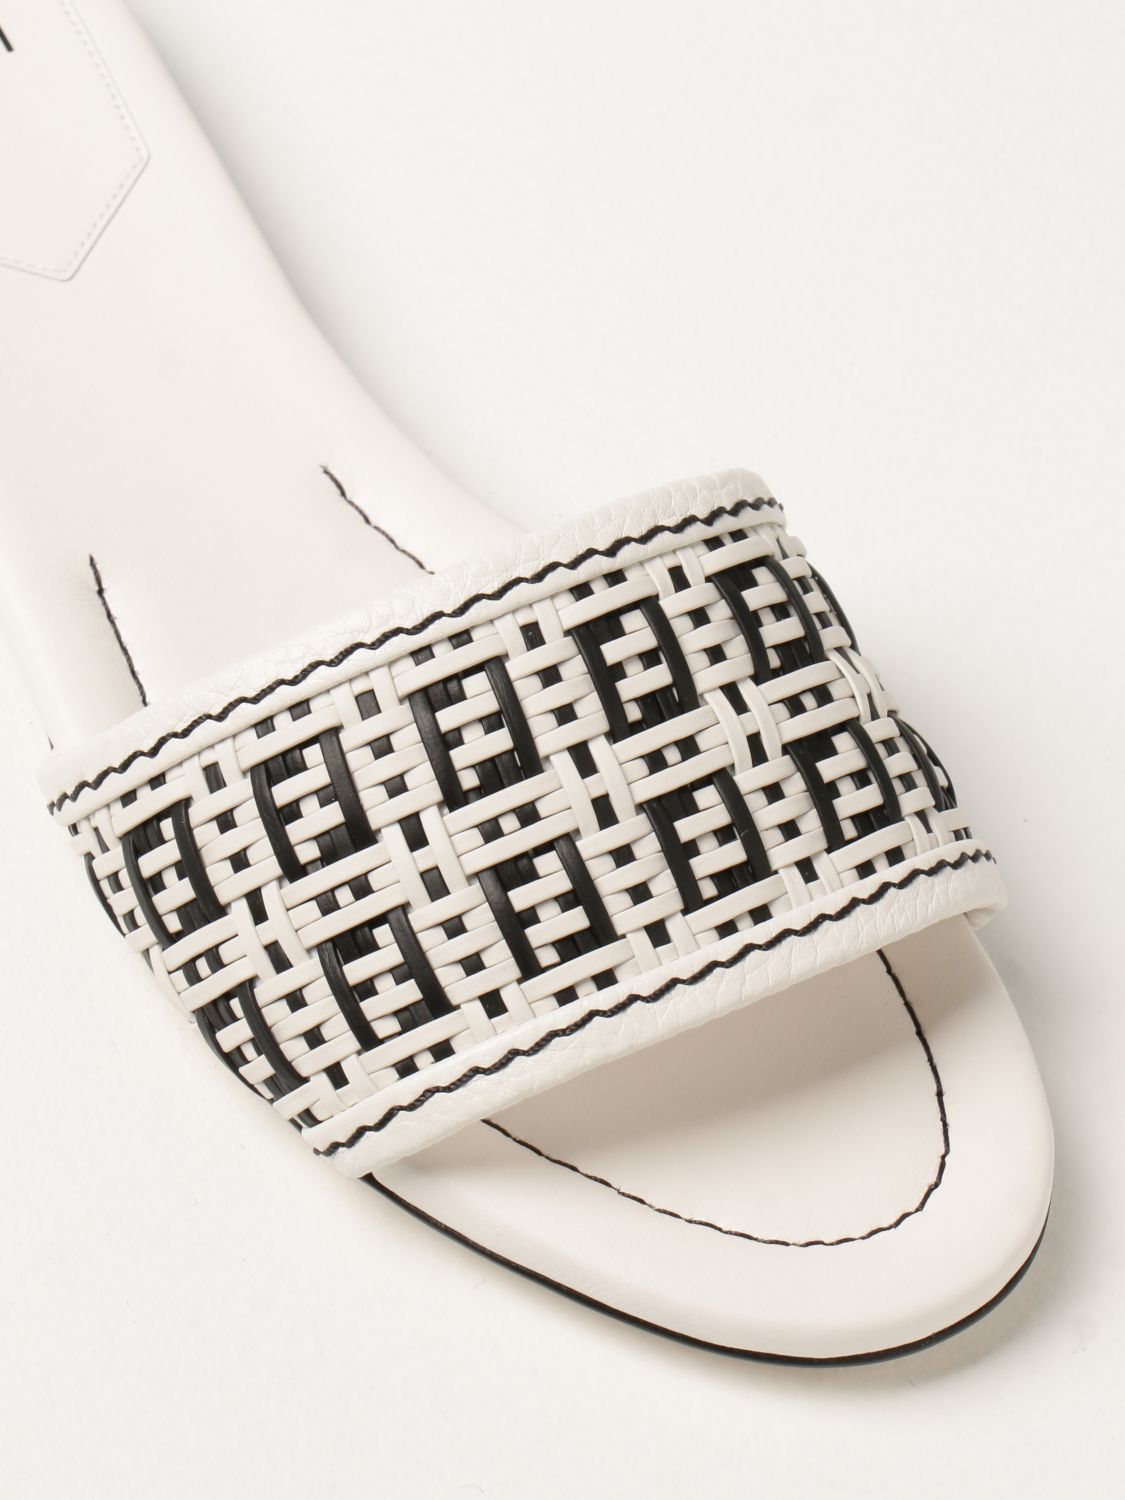 Fendi Vitello leather strapped sandals Snow White color. Gold logo